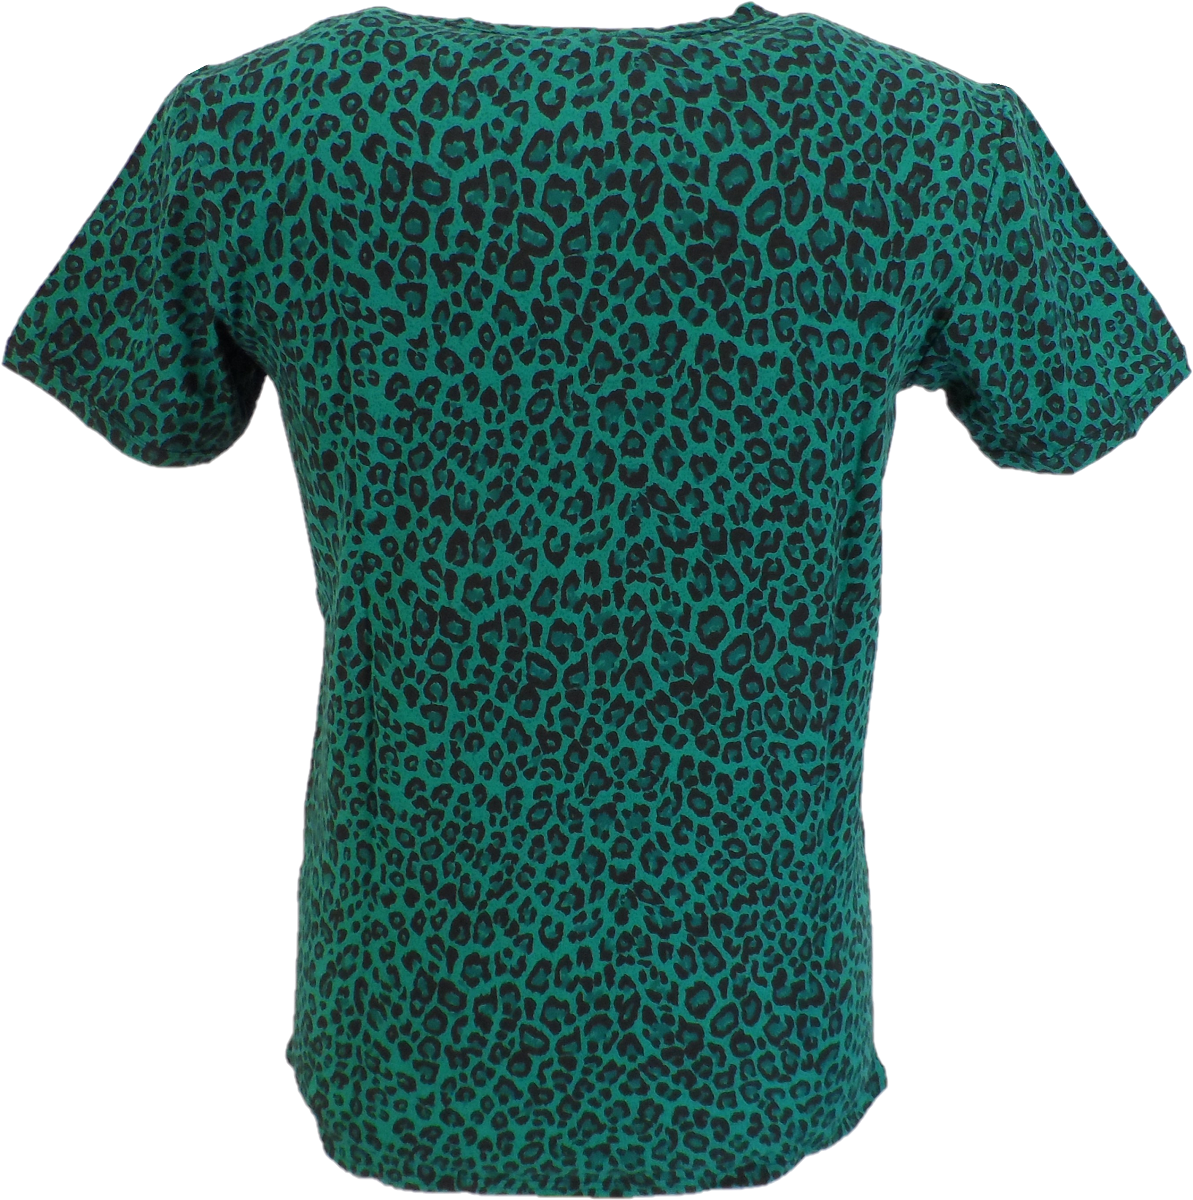 Run & Fly Mens Retro 70s Teal Leopard Print T Shirt